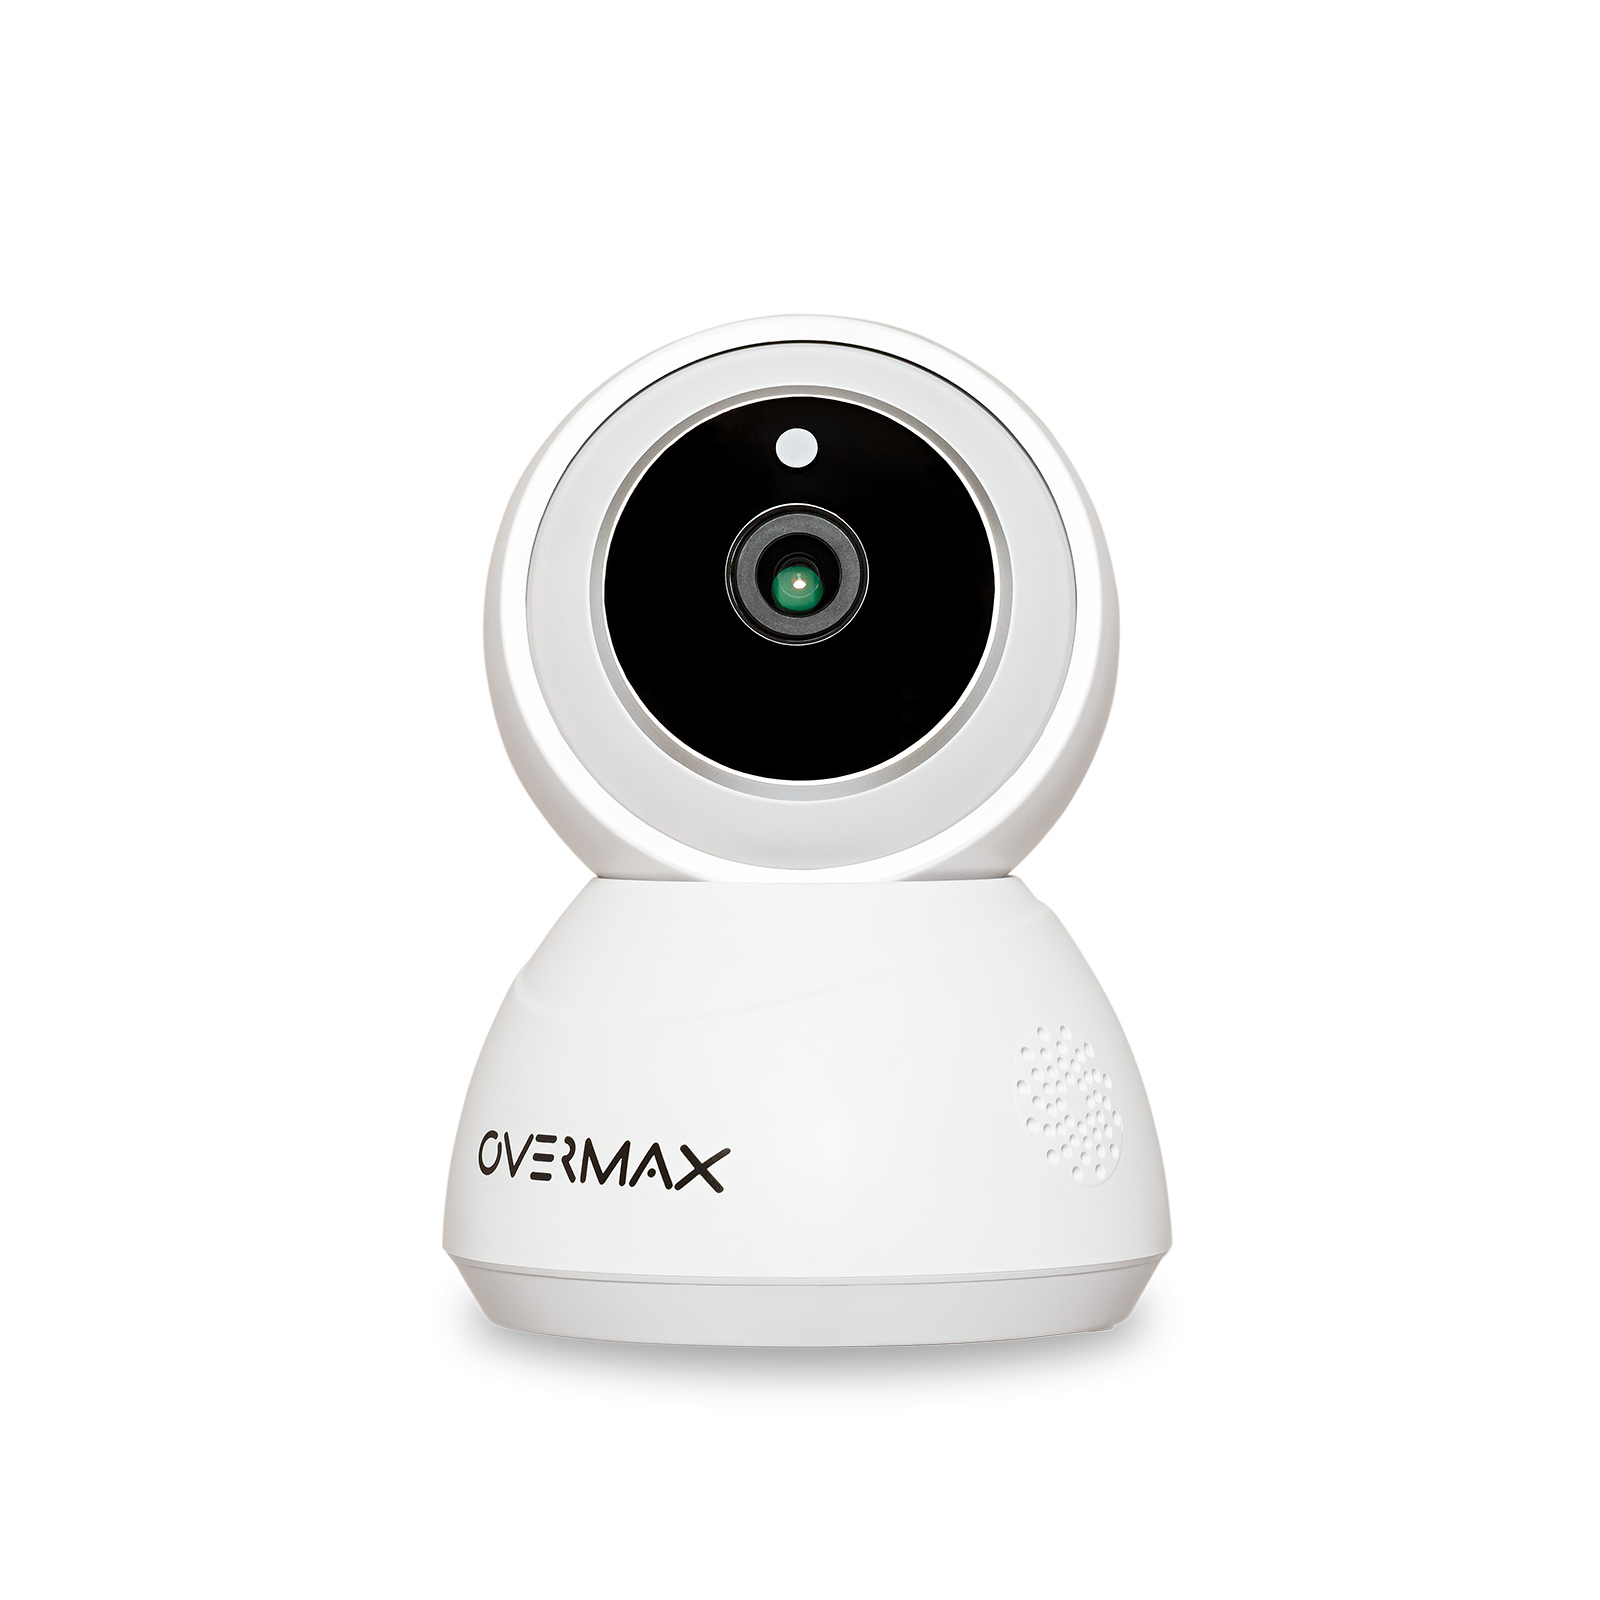 OVERMAX Camspot 3.7, x 1920 Full HD px Sicherheitskamera, 1080 Video: - Auflösung